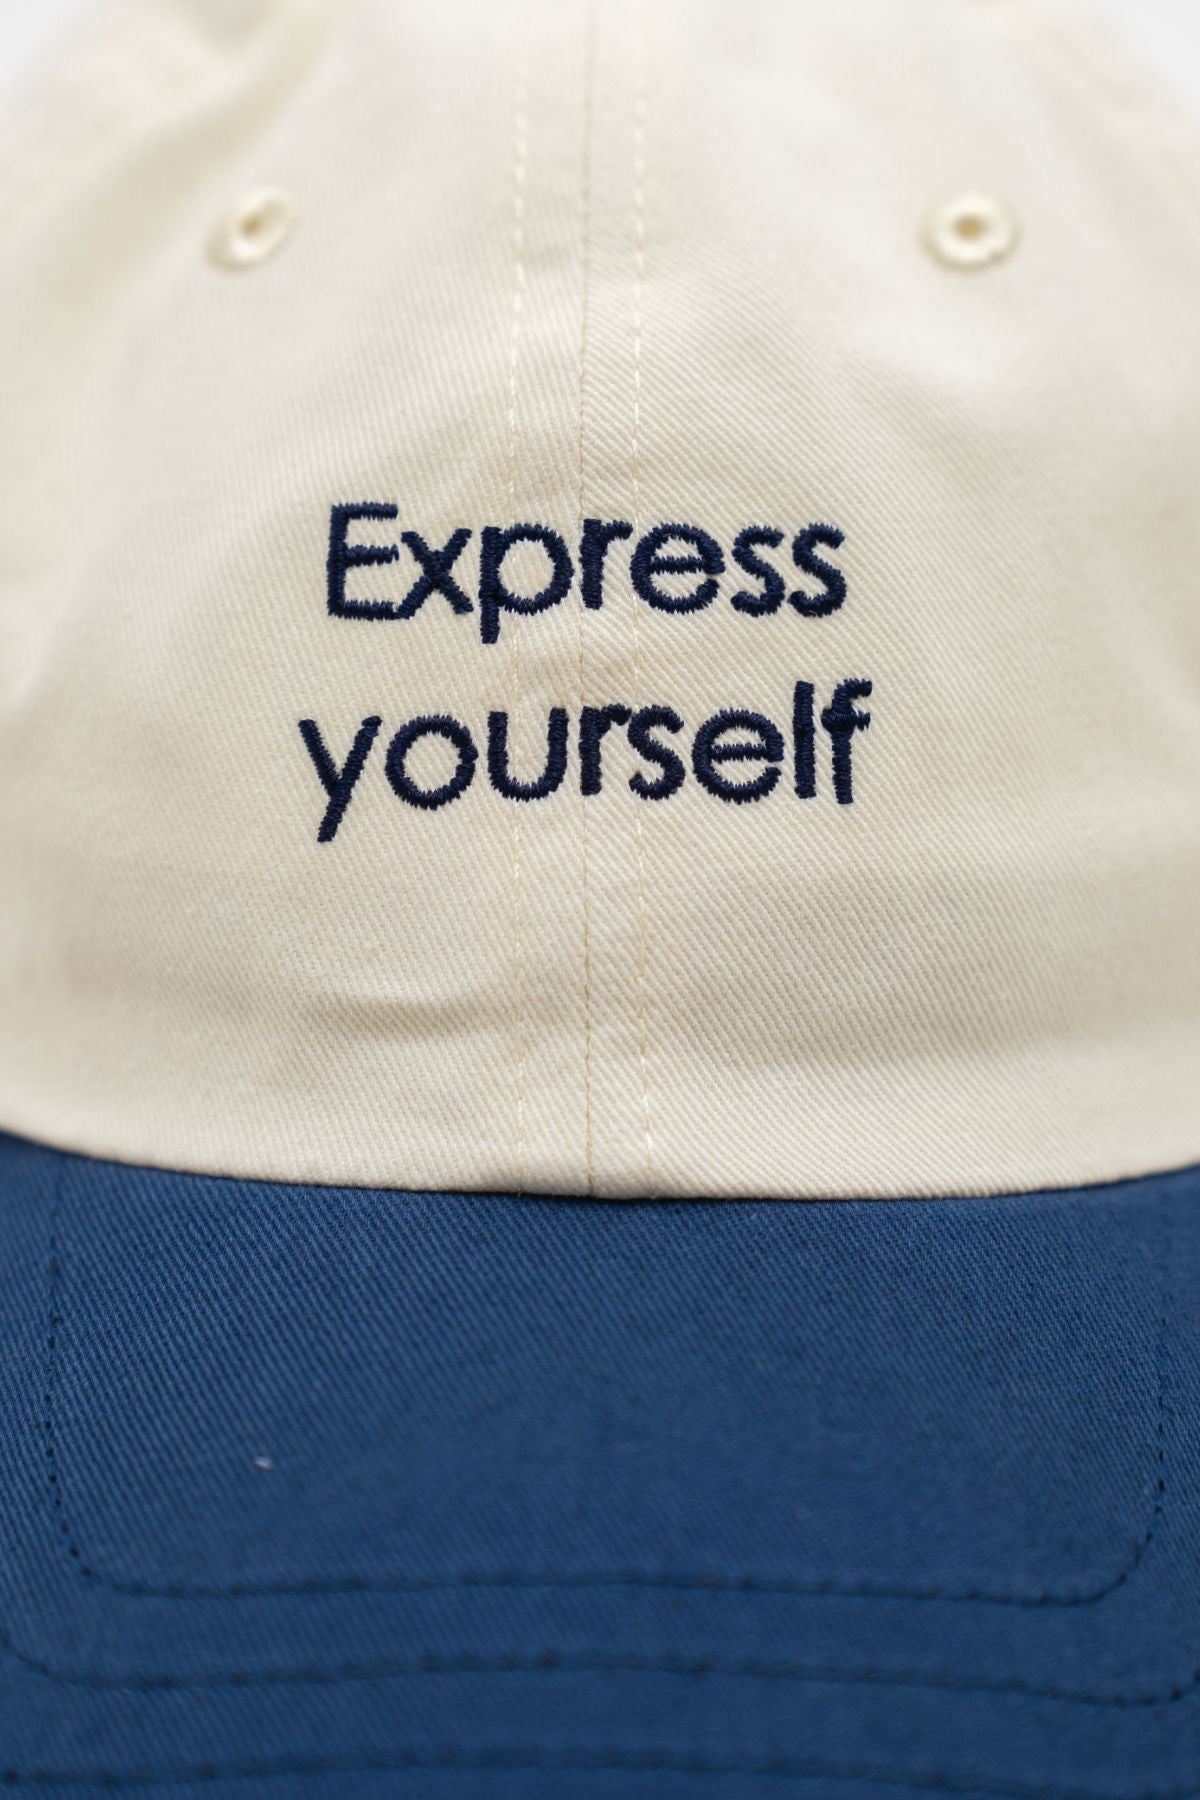 Casquette Express yourself - Jam